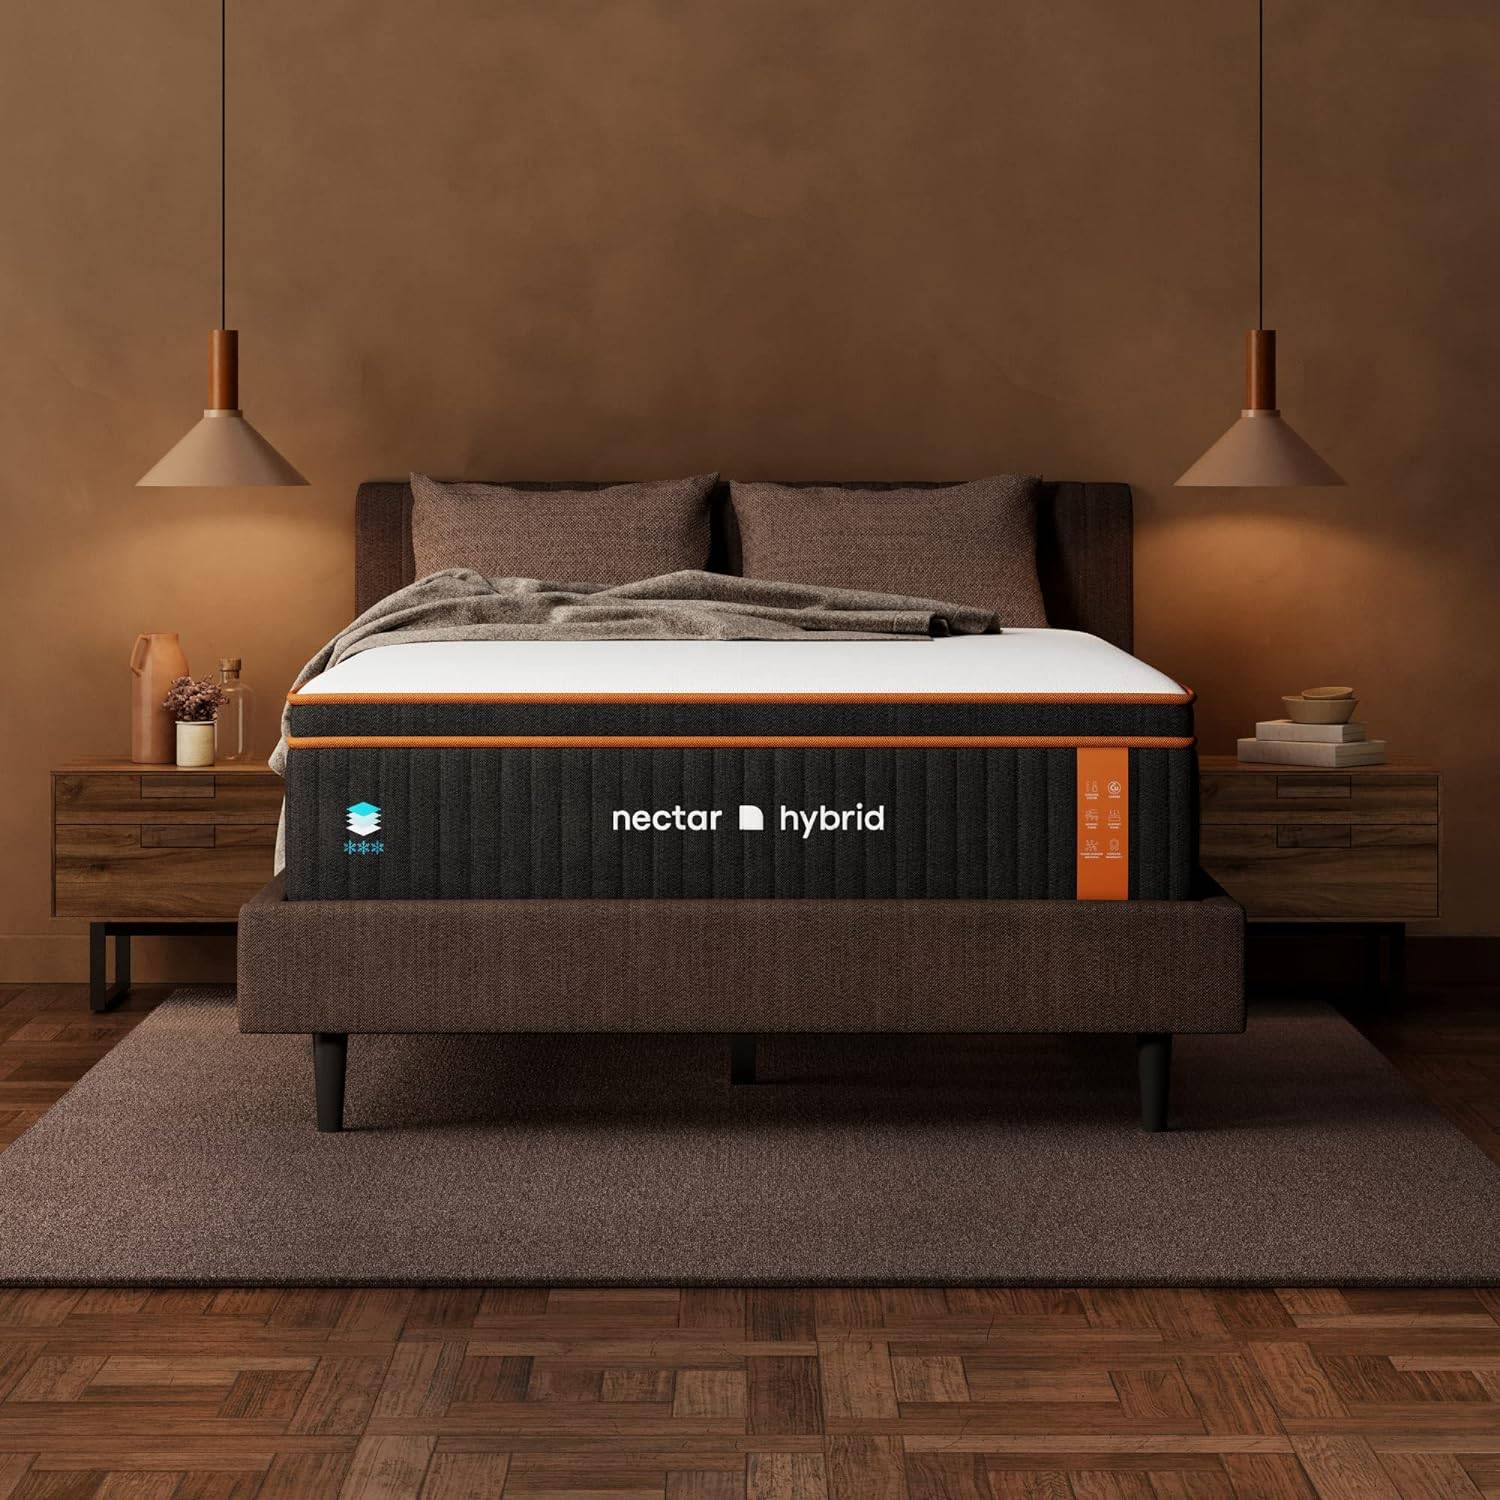 Nectar Premier Copper Hybrid Mattress Review (Sleep Examiner Sleep Products)